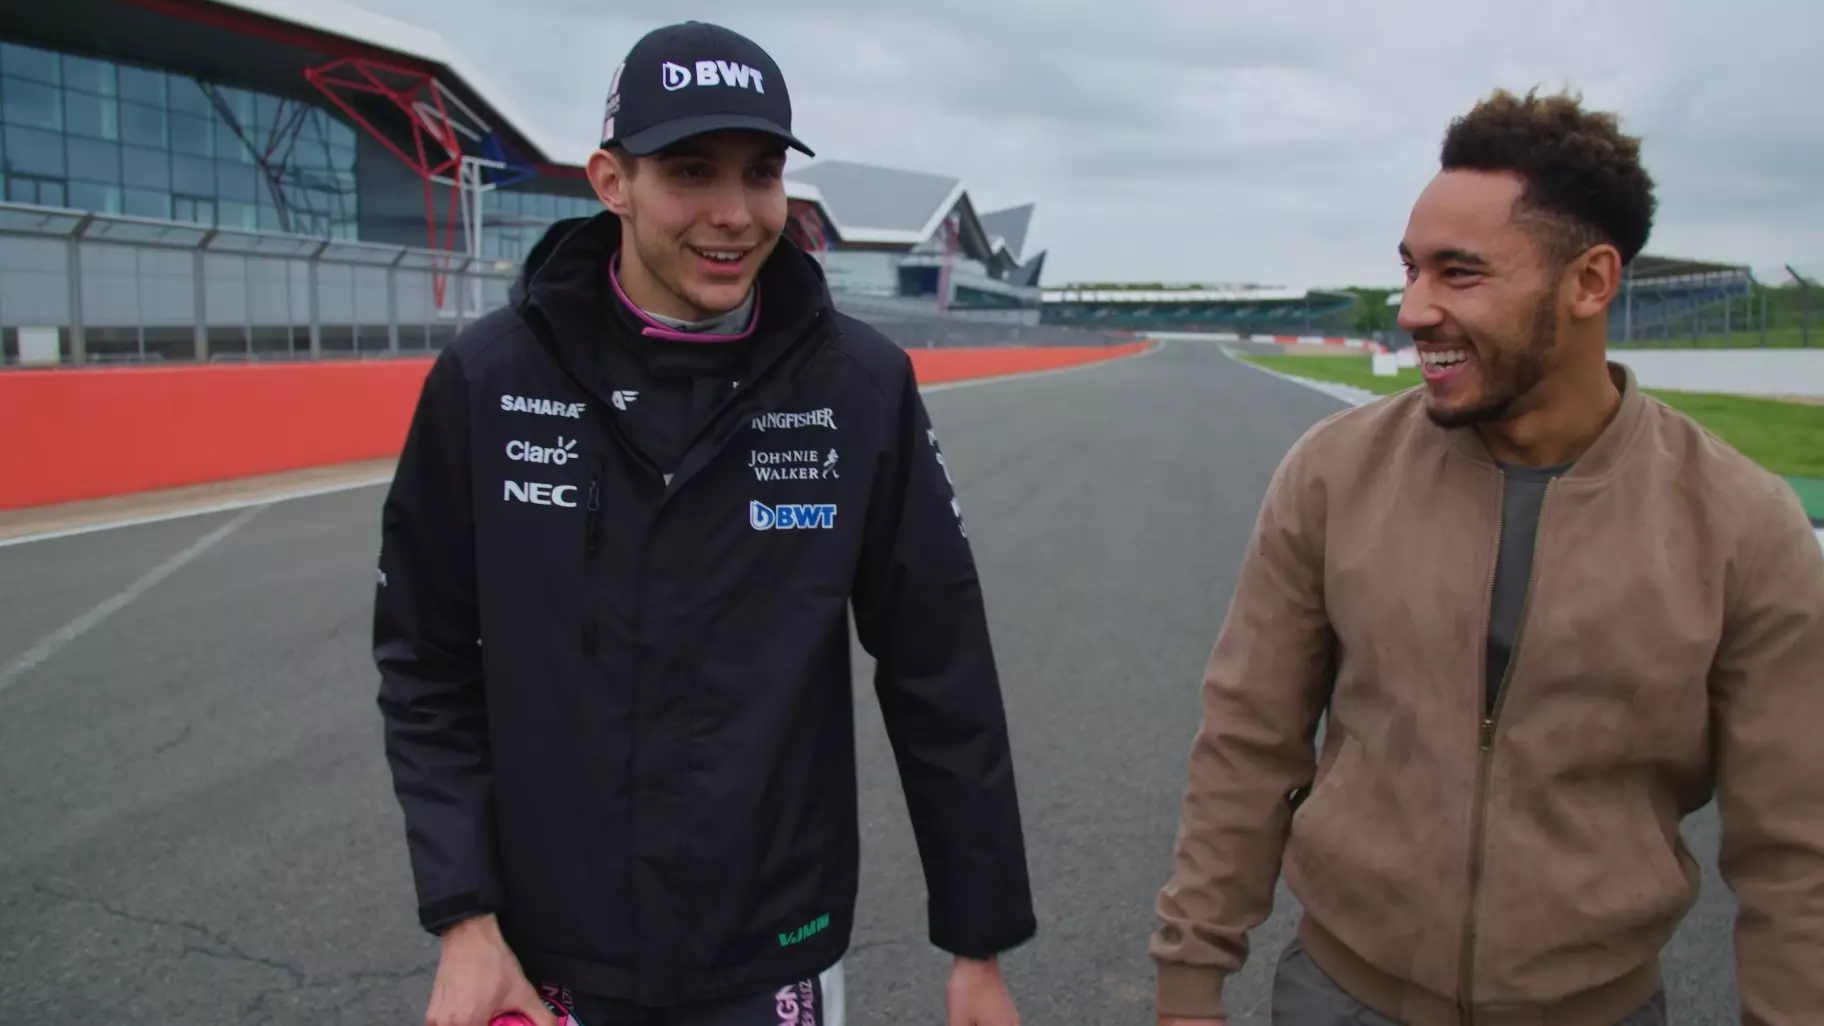 WATCH: SPORTbible Meets Sahara Force India Driver Esteban Ocon